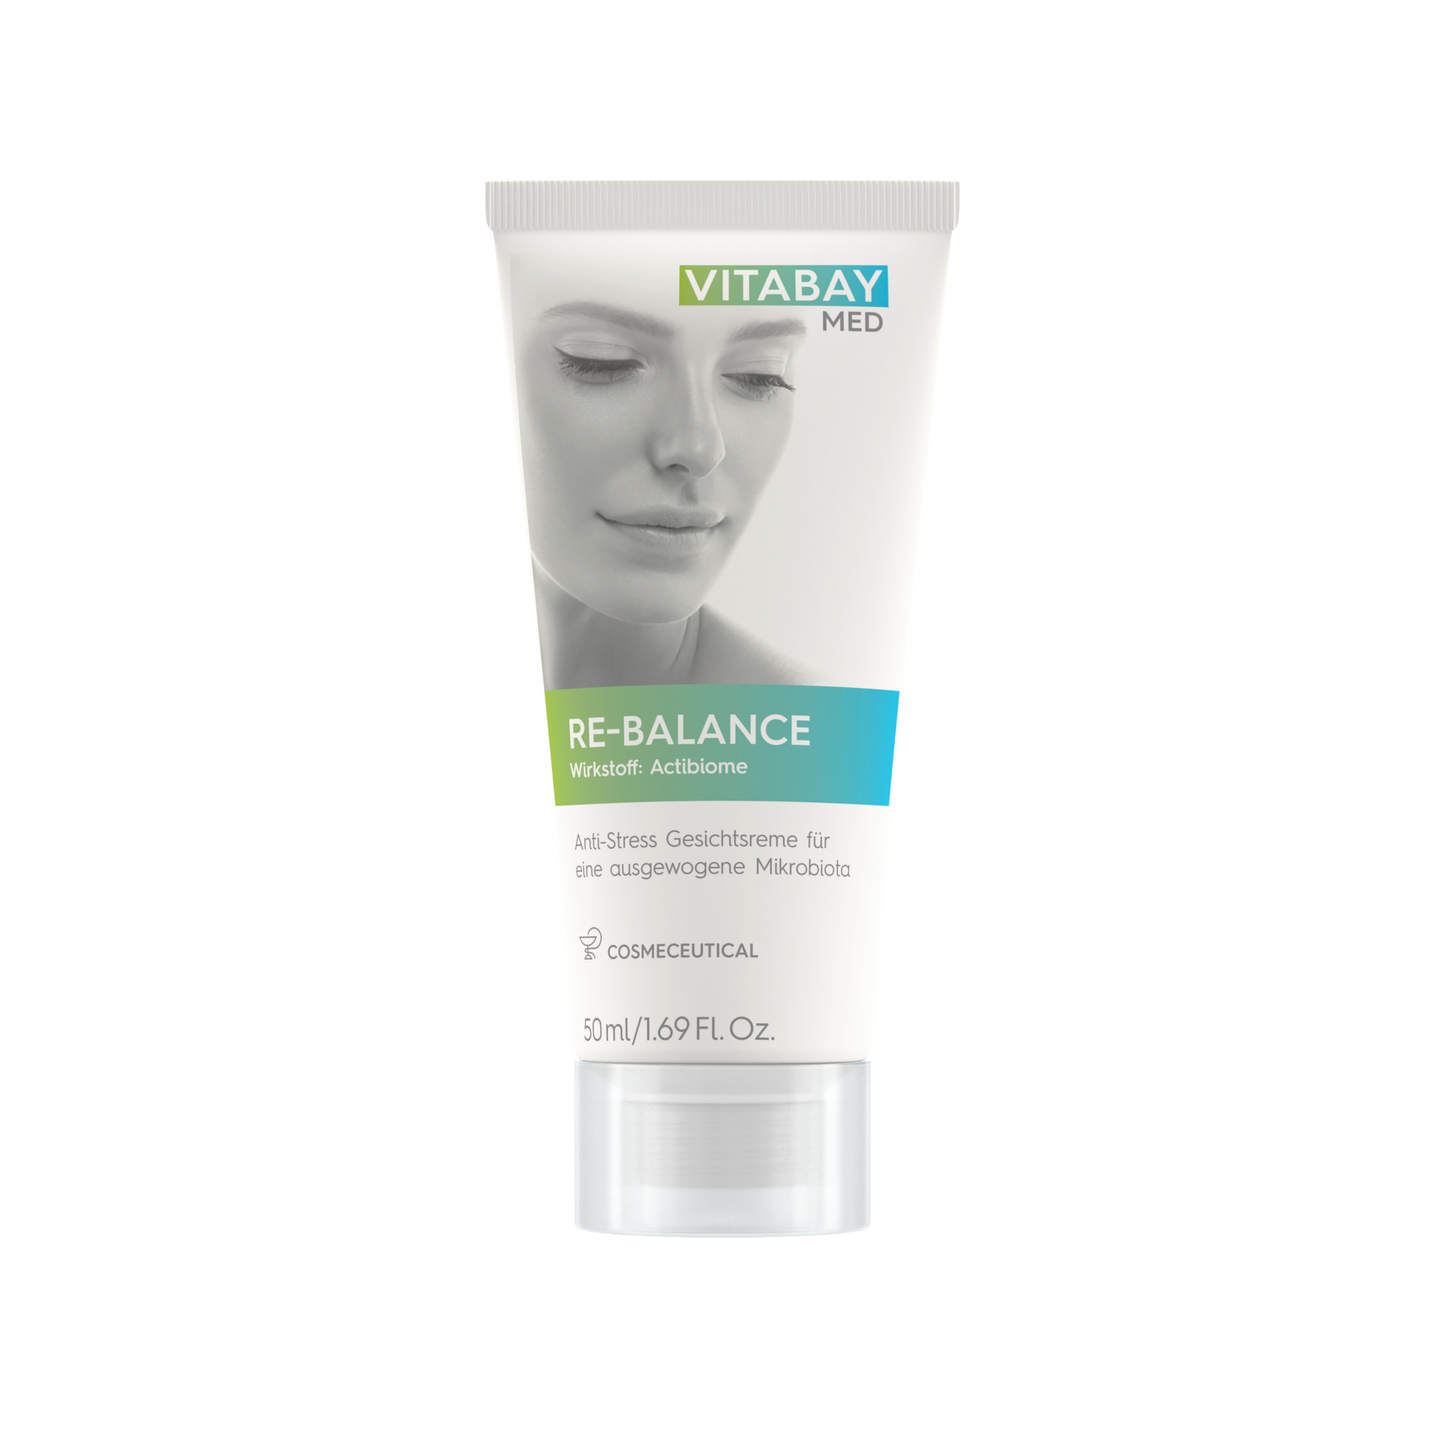 Re-Balance 50ml - Anti-Stress Gesichtscreme